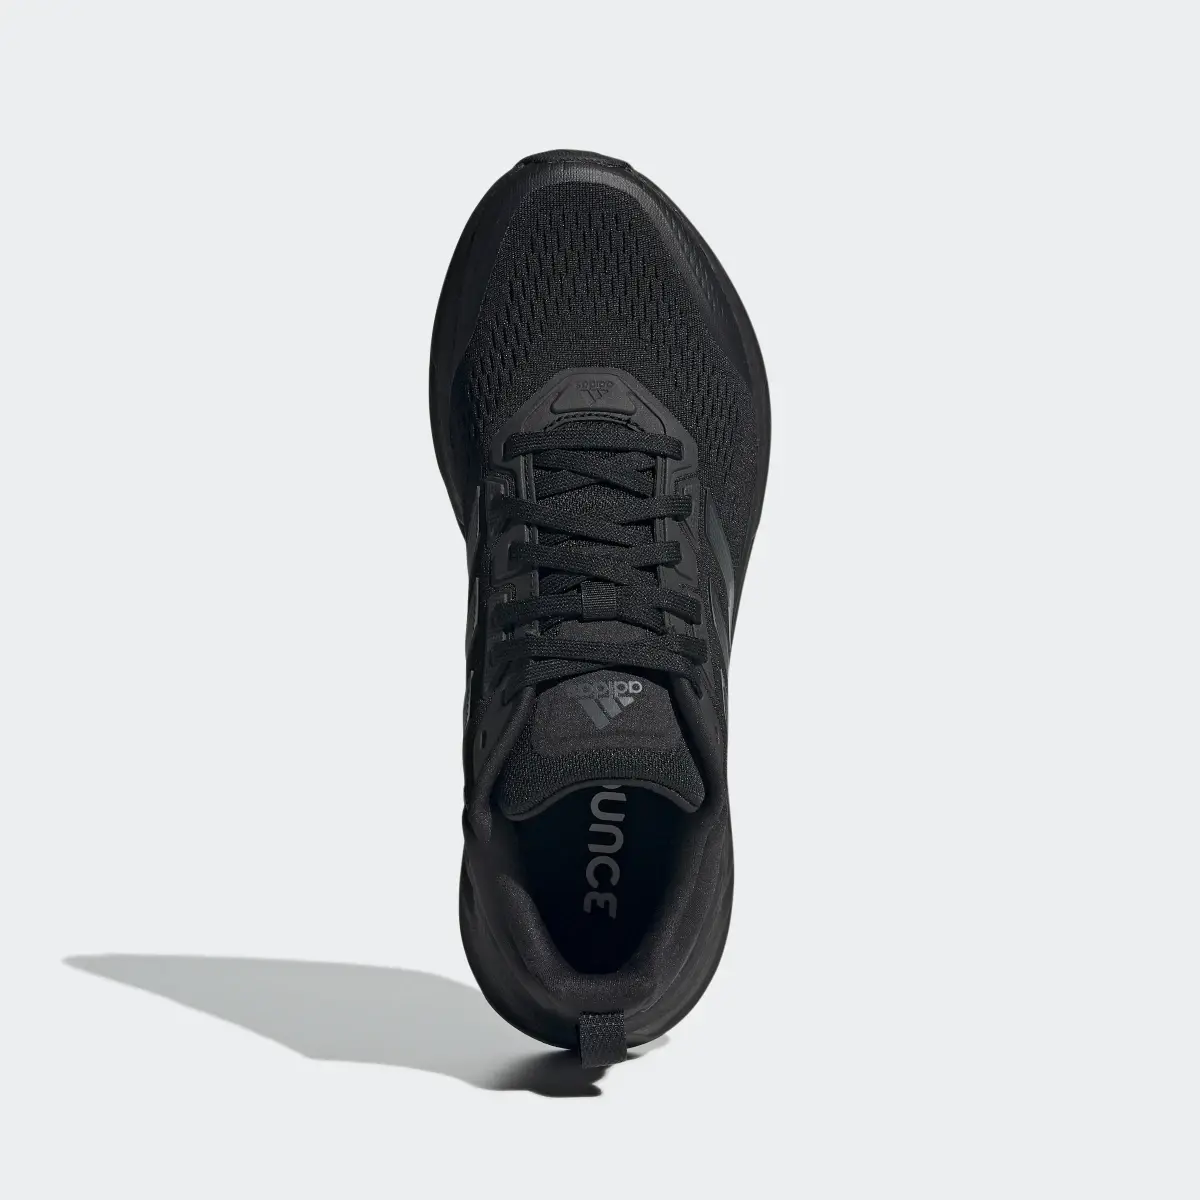 Adidas Questar Shoes. 3